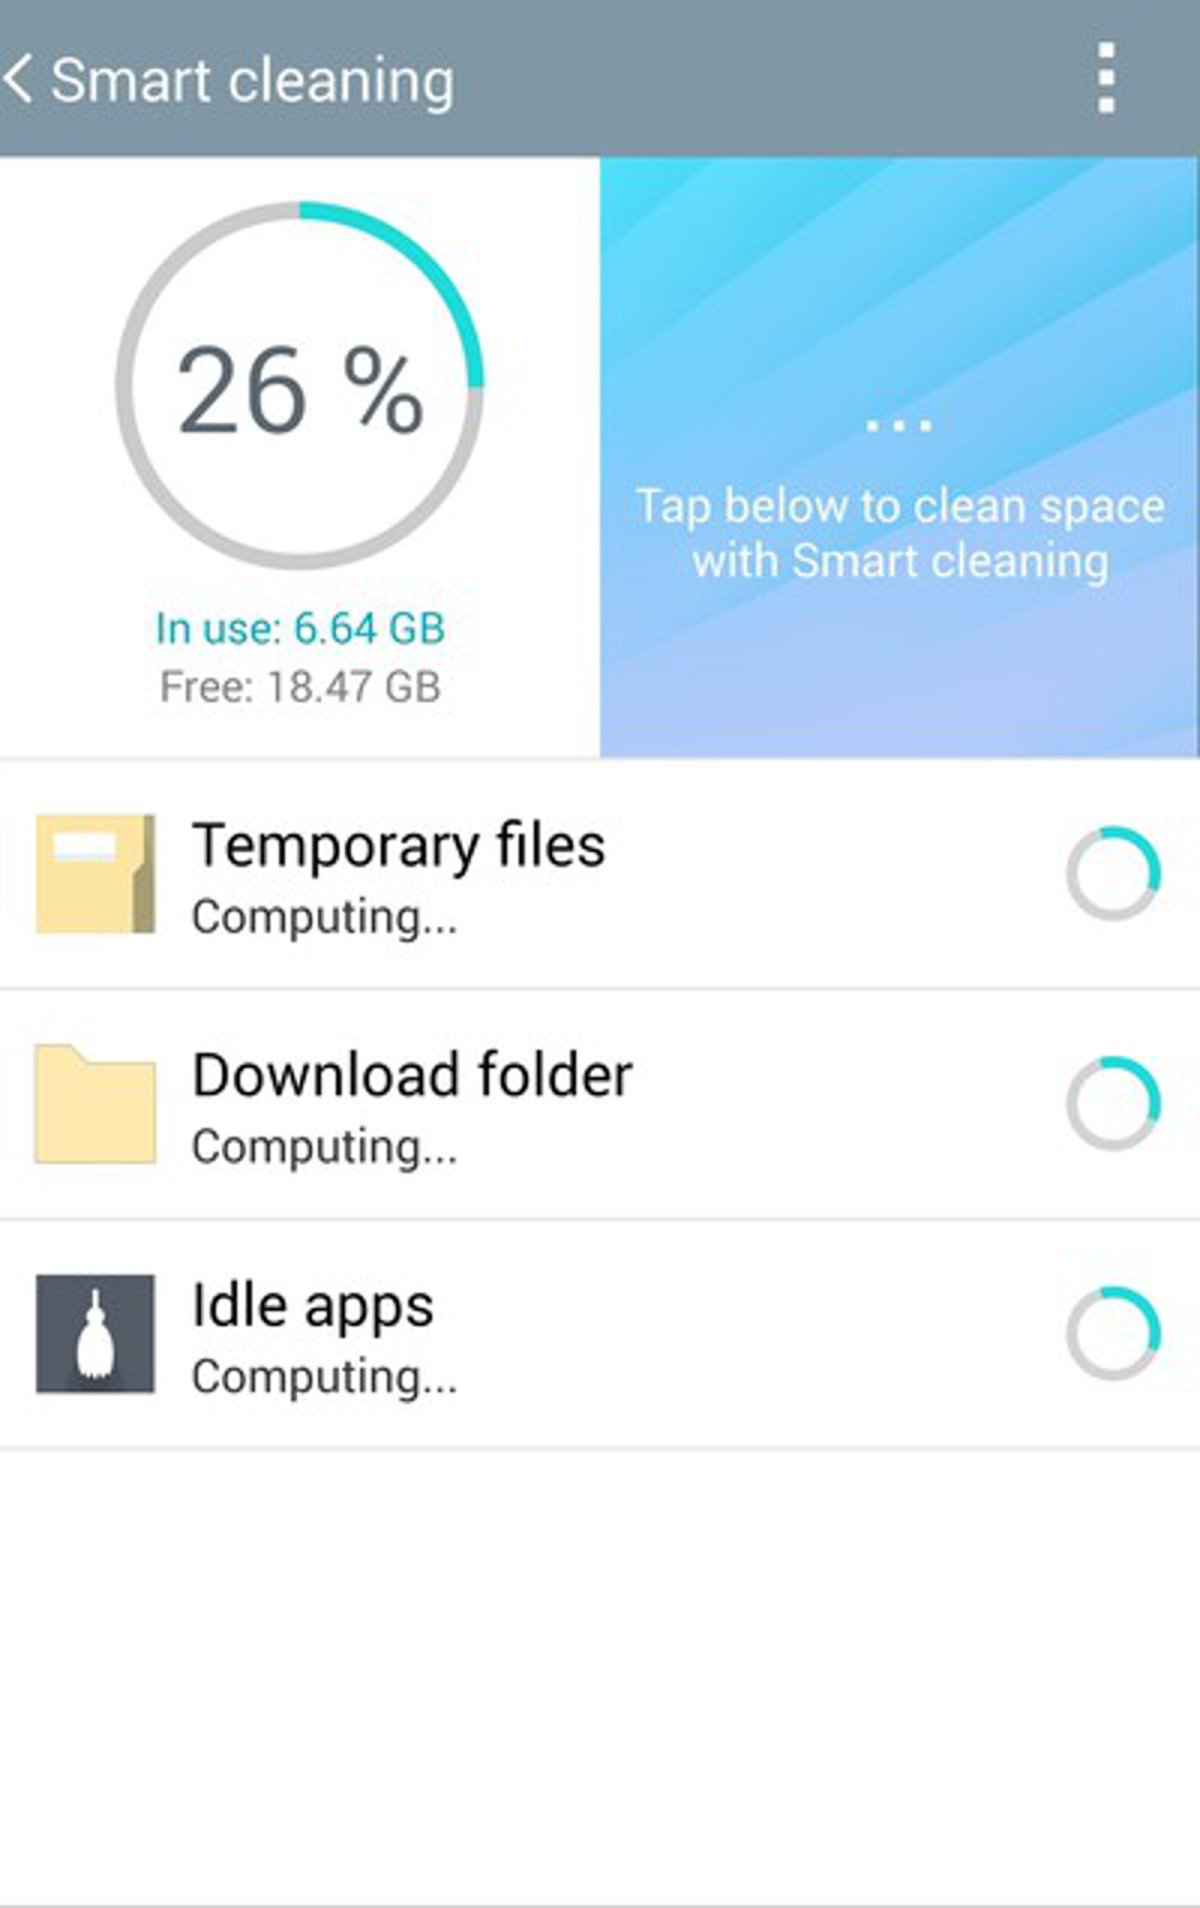 LG Smart Cleaning - UI